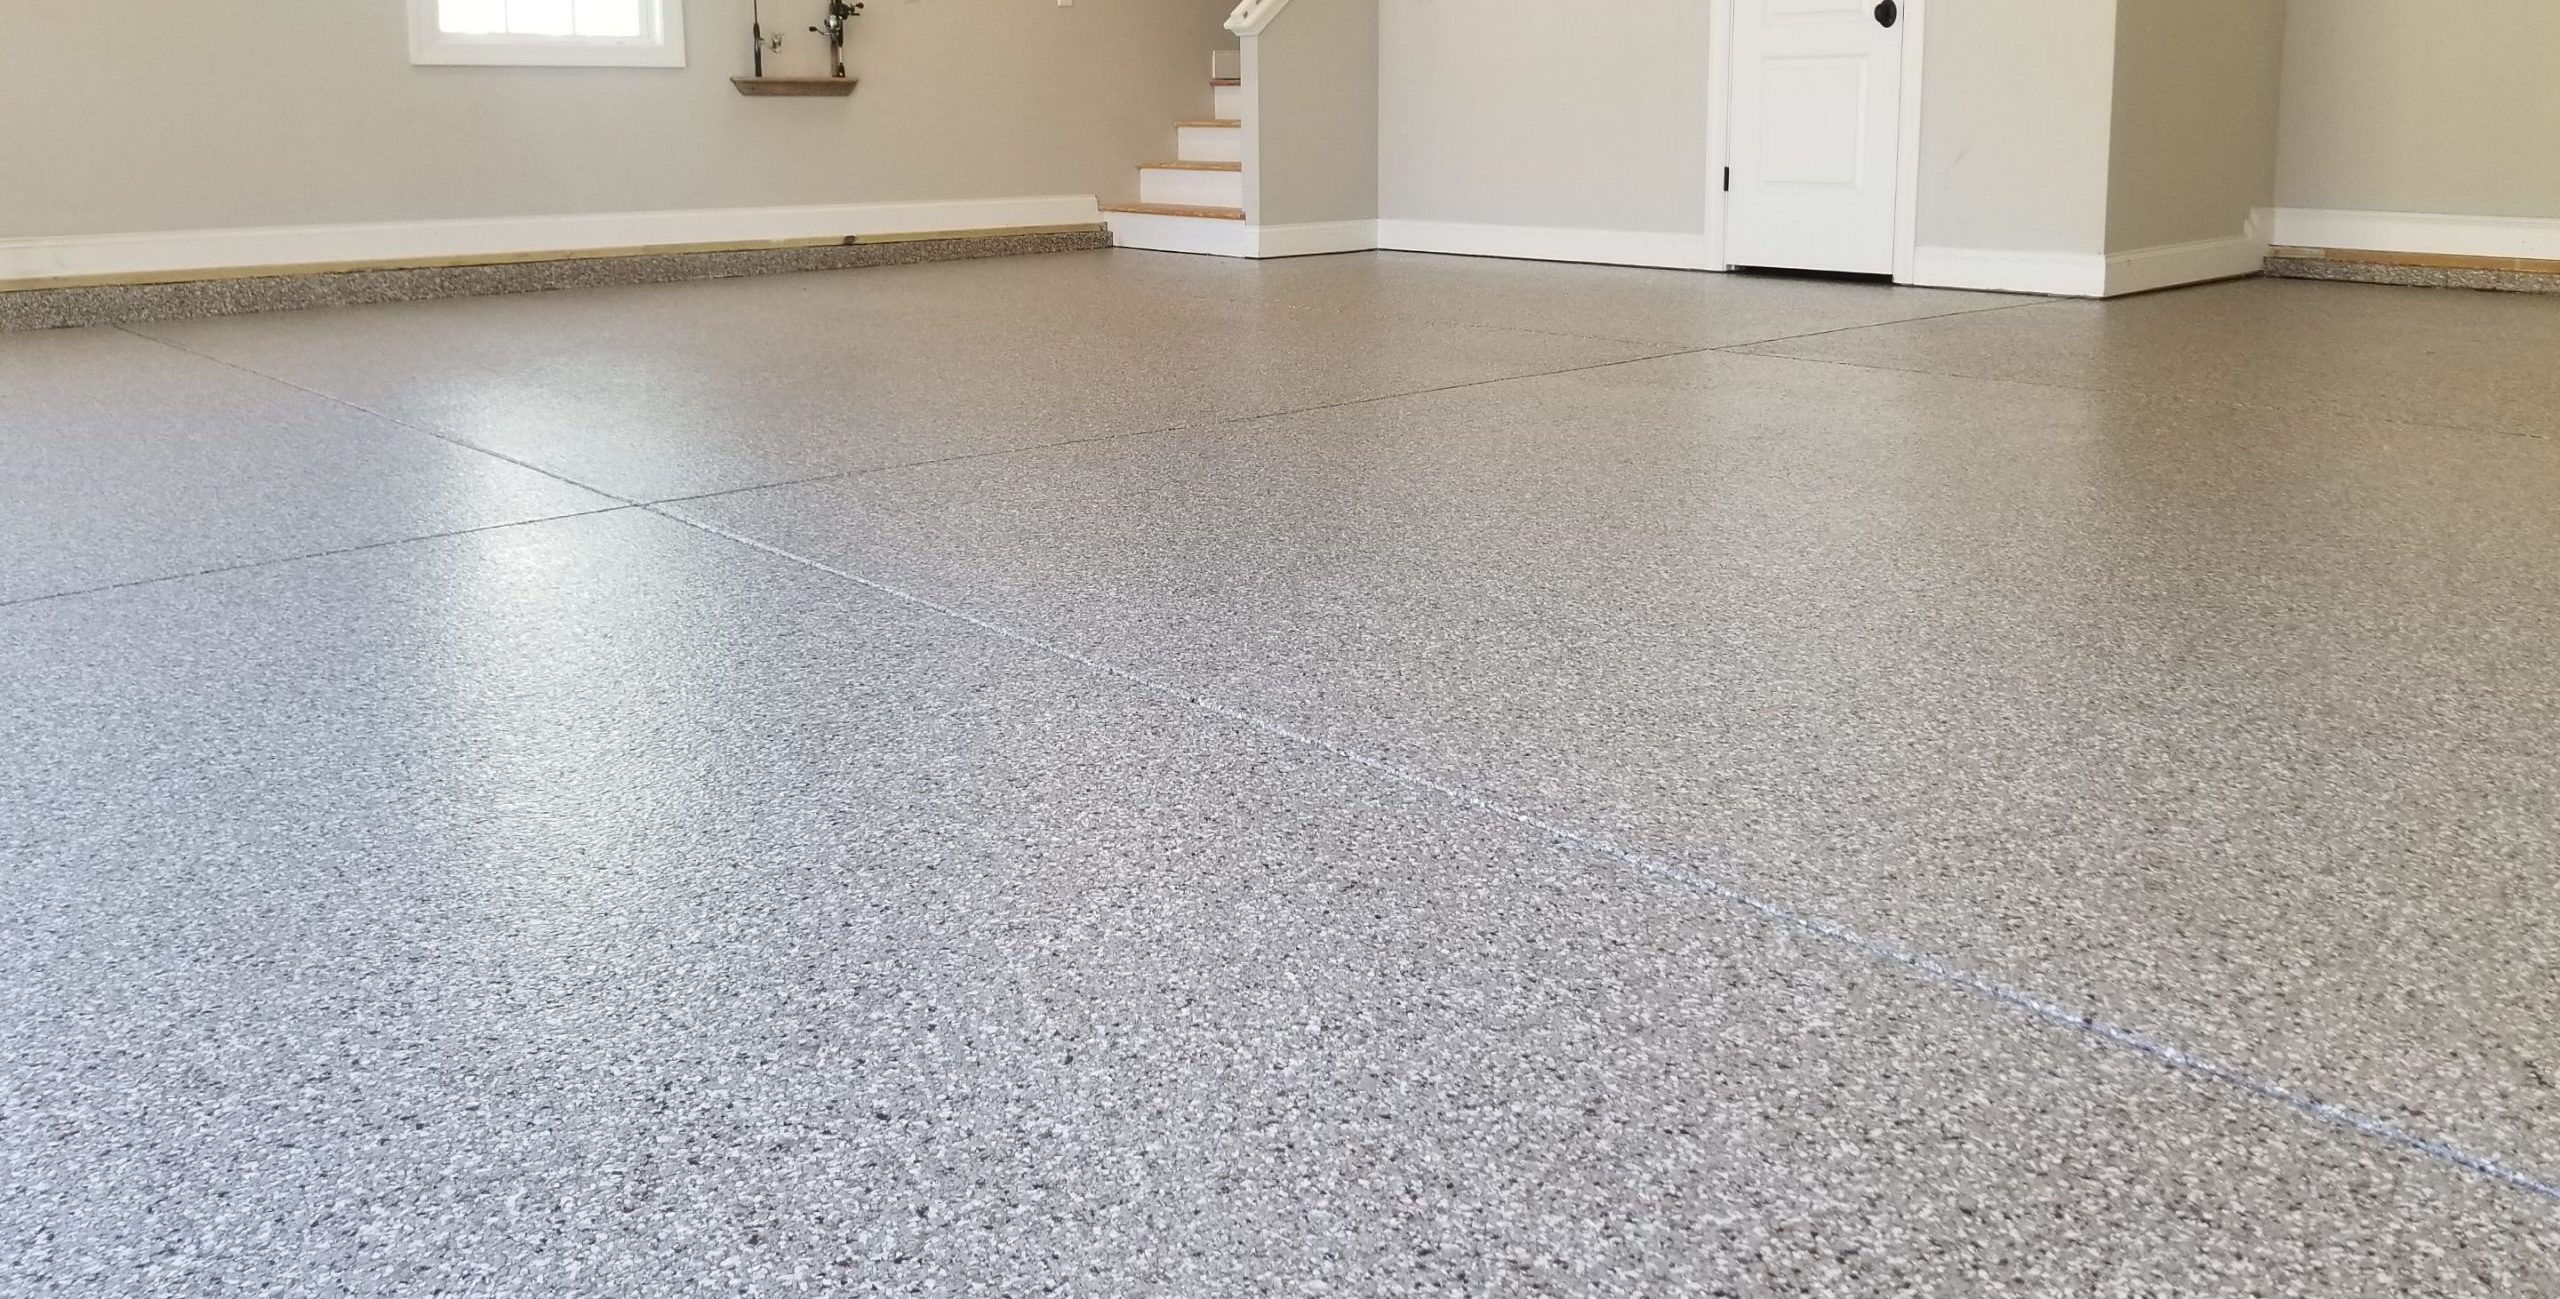 Why can epoxy garage floor coatings turn yellow?